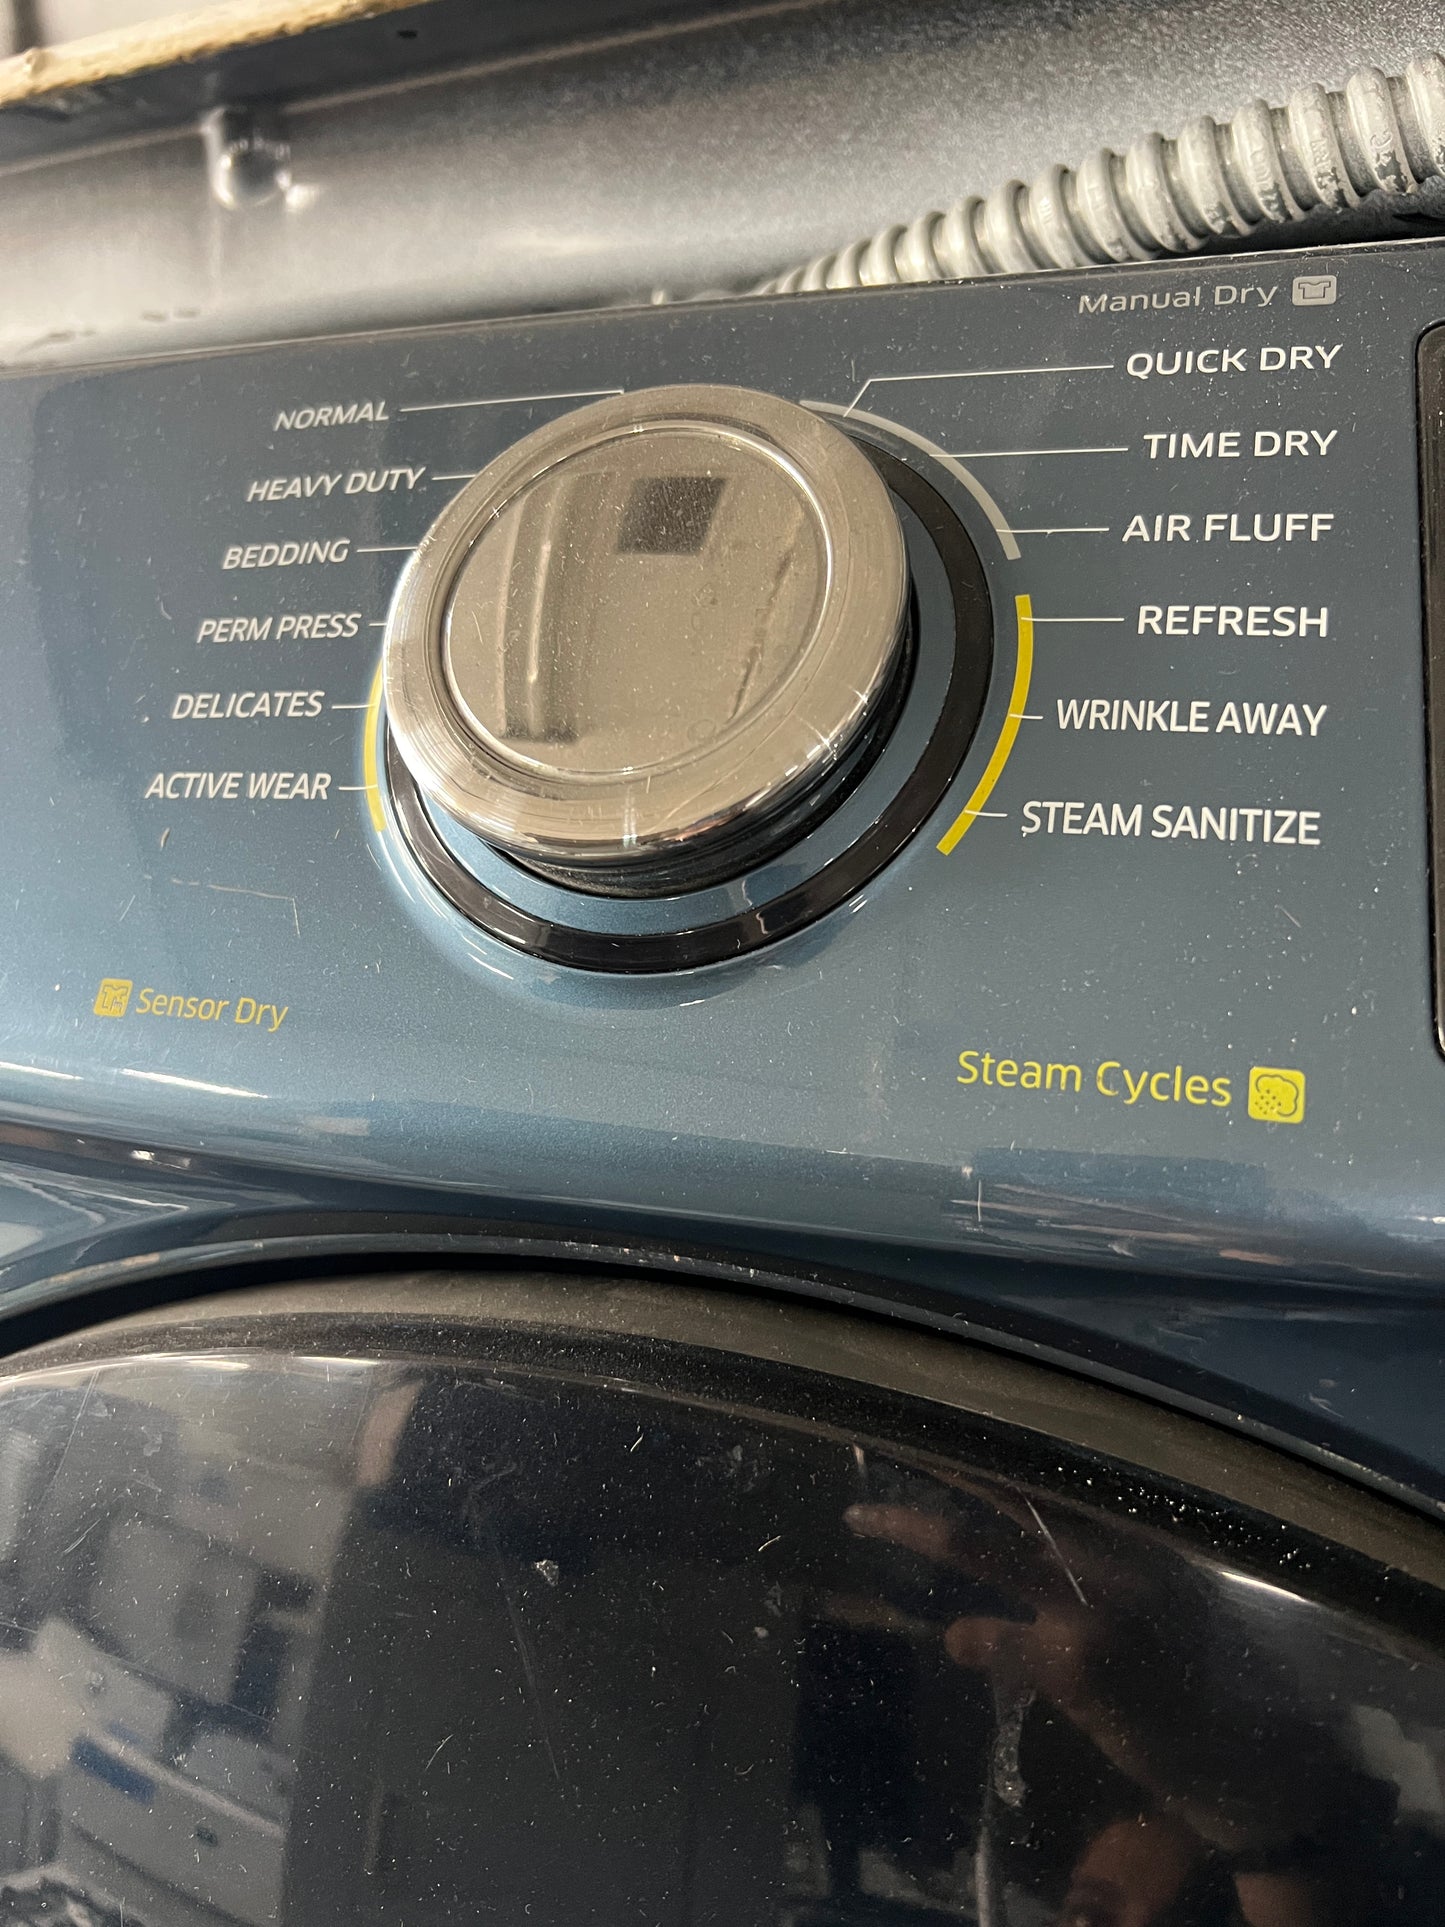 Samsung Front Load Gas Dryer in Blue  888153  DV45K6200GZ/A3